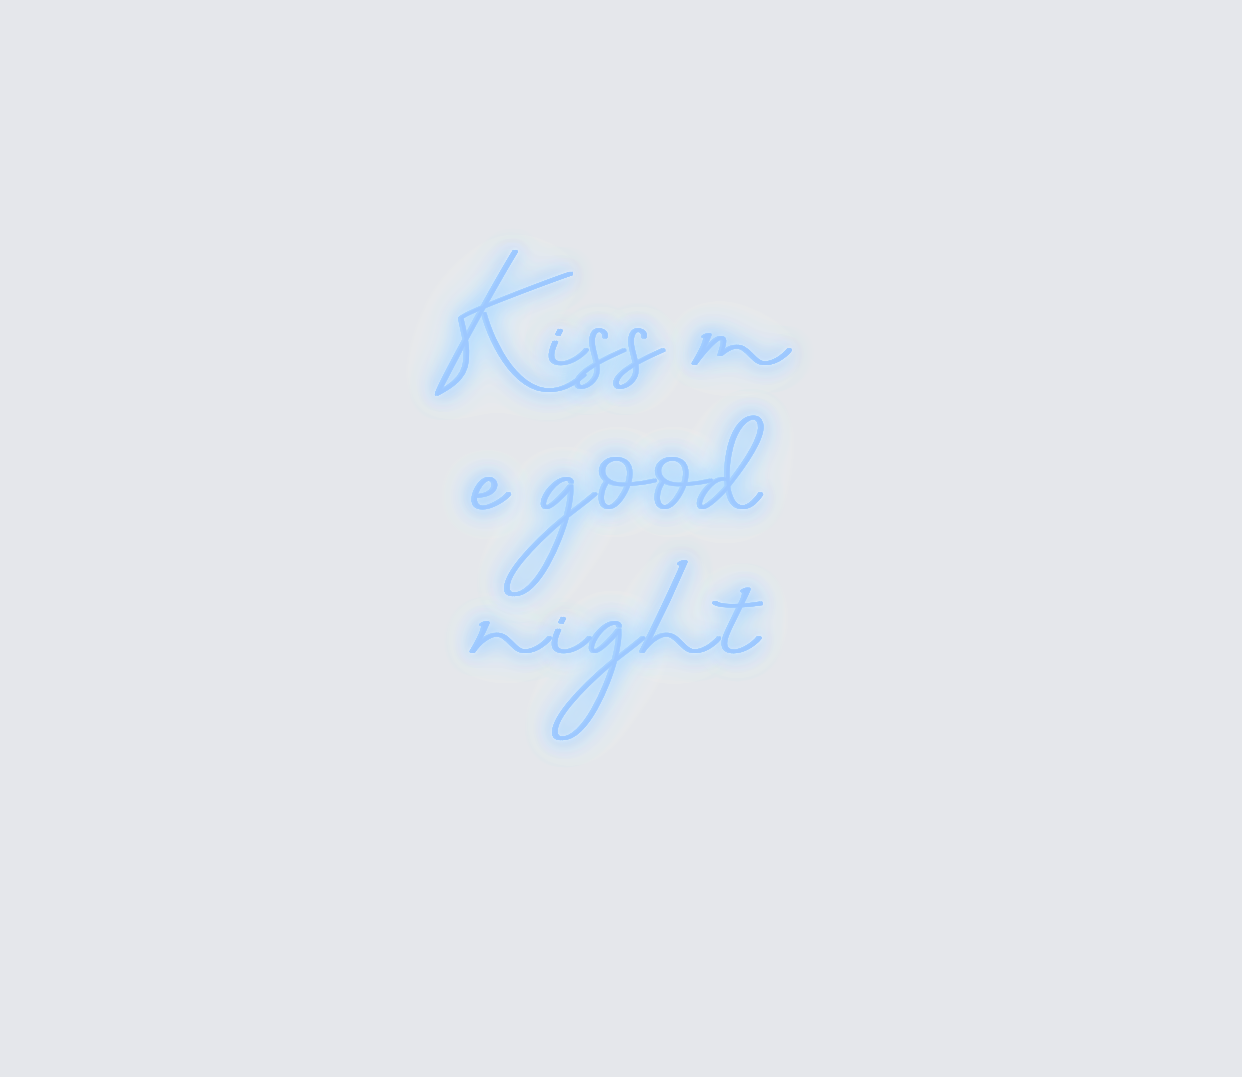 Custom neon sign - Kiss me goodnight